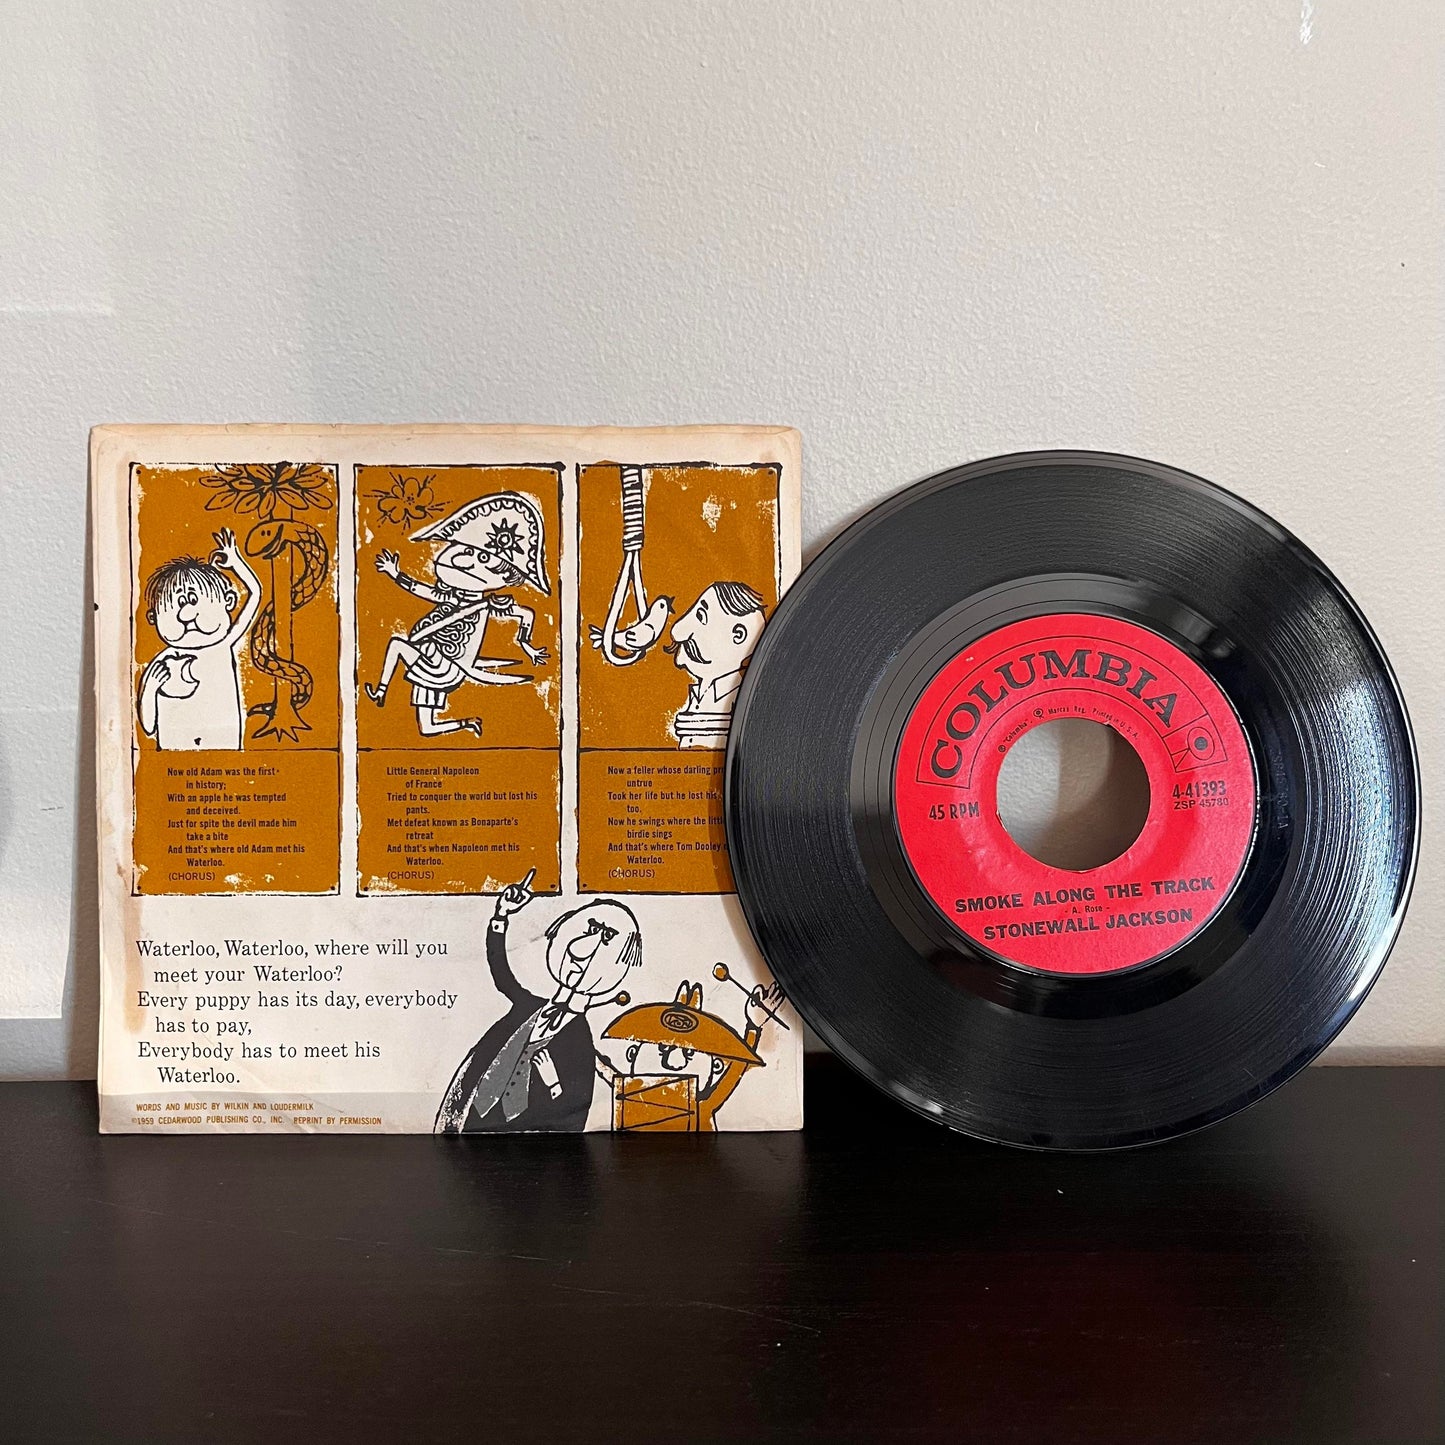 Stonewall Jackson Waterloo 45 RPM Columbia 4-41393 EX Vinyl